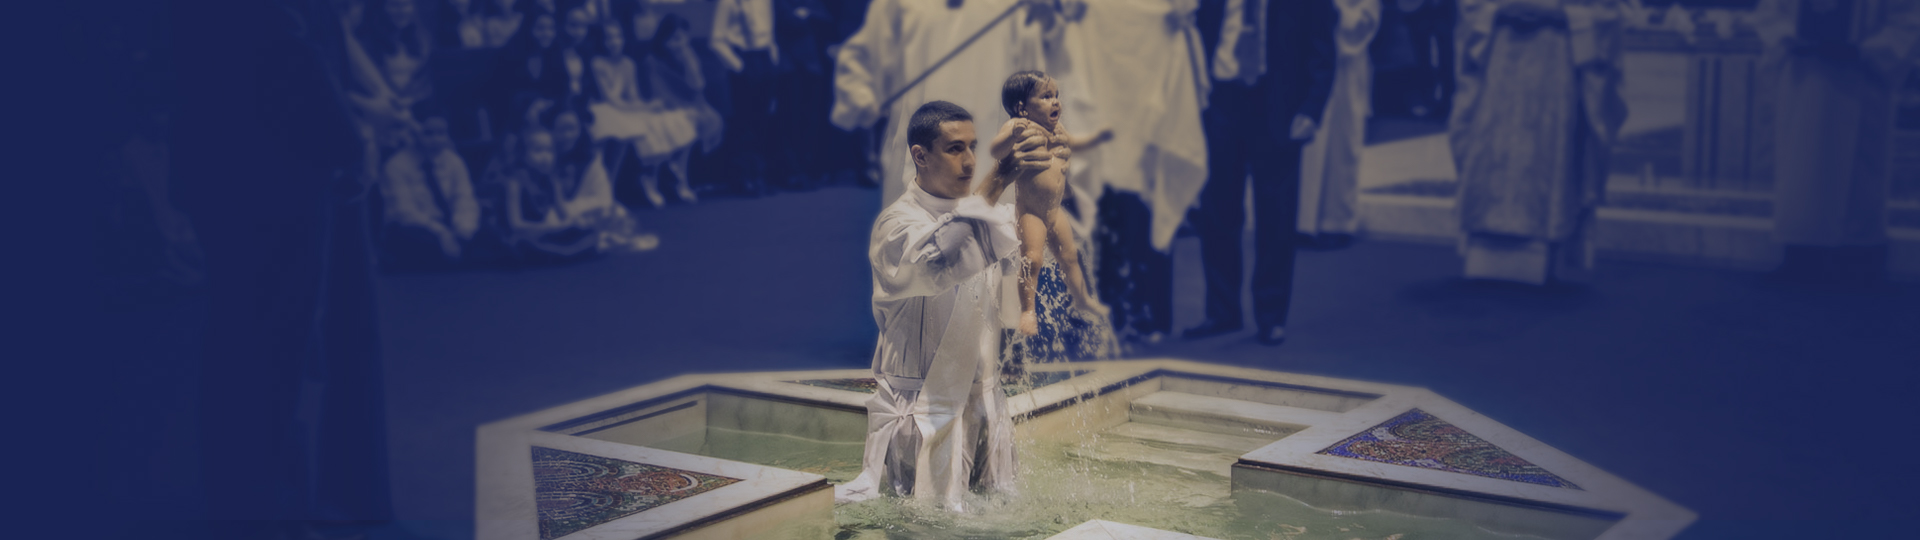 Batismo - Paróquia Nossa Senhora da Esperança, Asa Norte, Brasília-DF